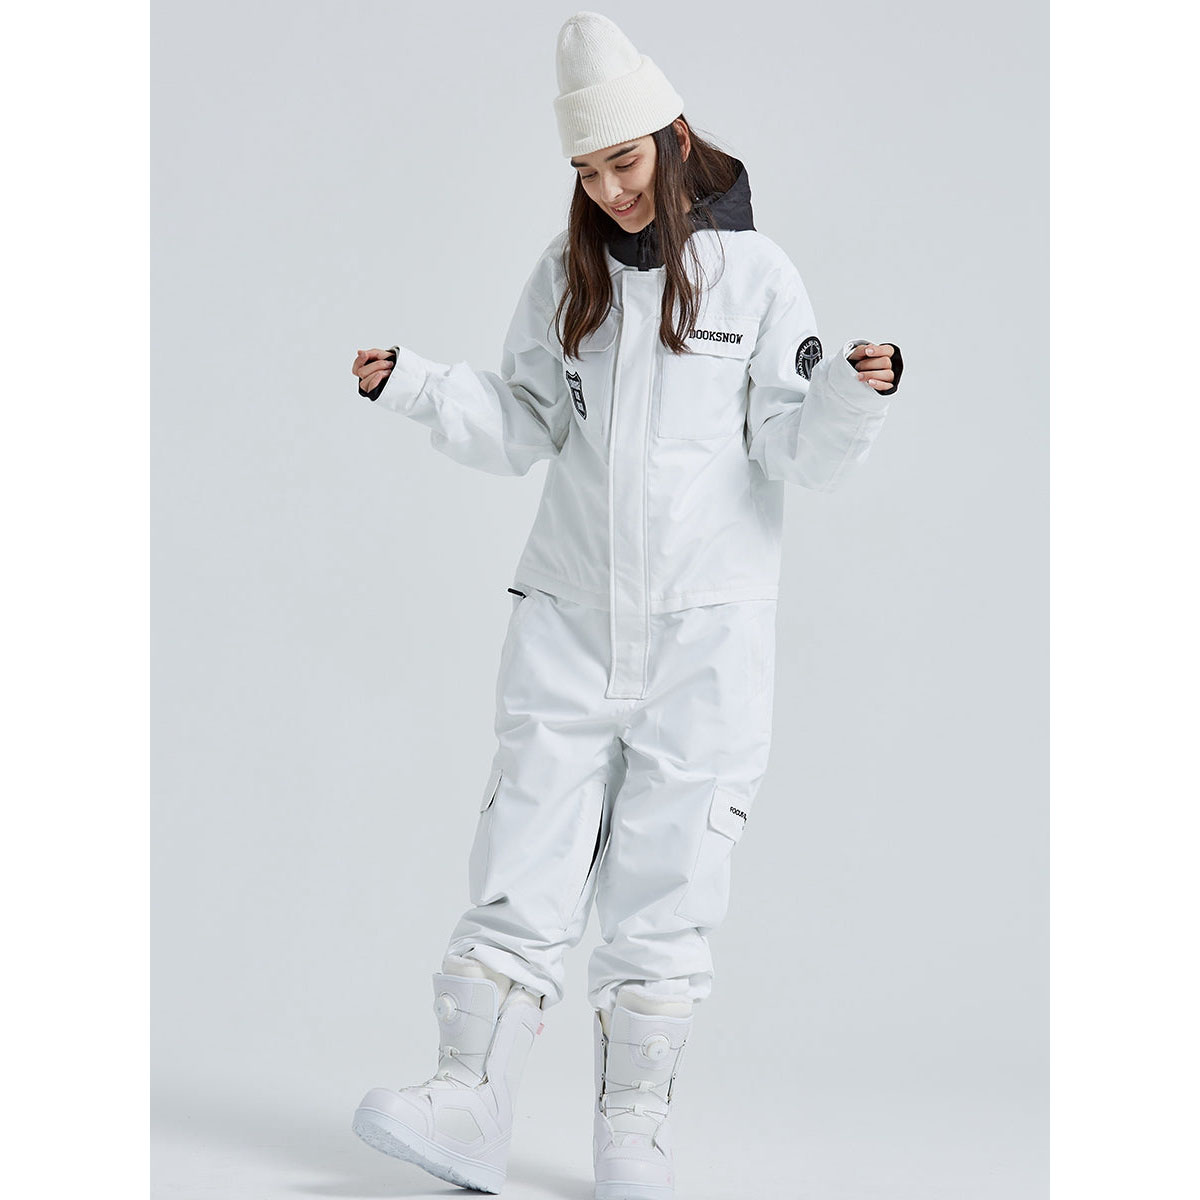 I-Jumpsuit Coveralls Snowboard Coats Ski Snow Suit